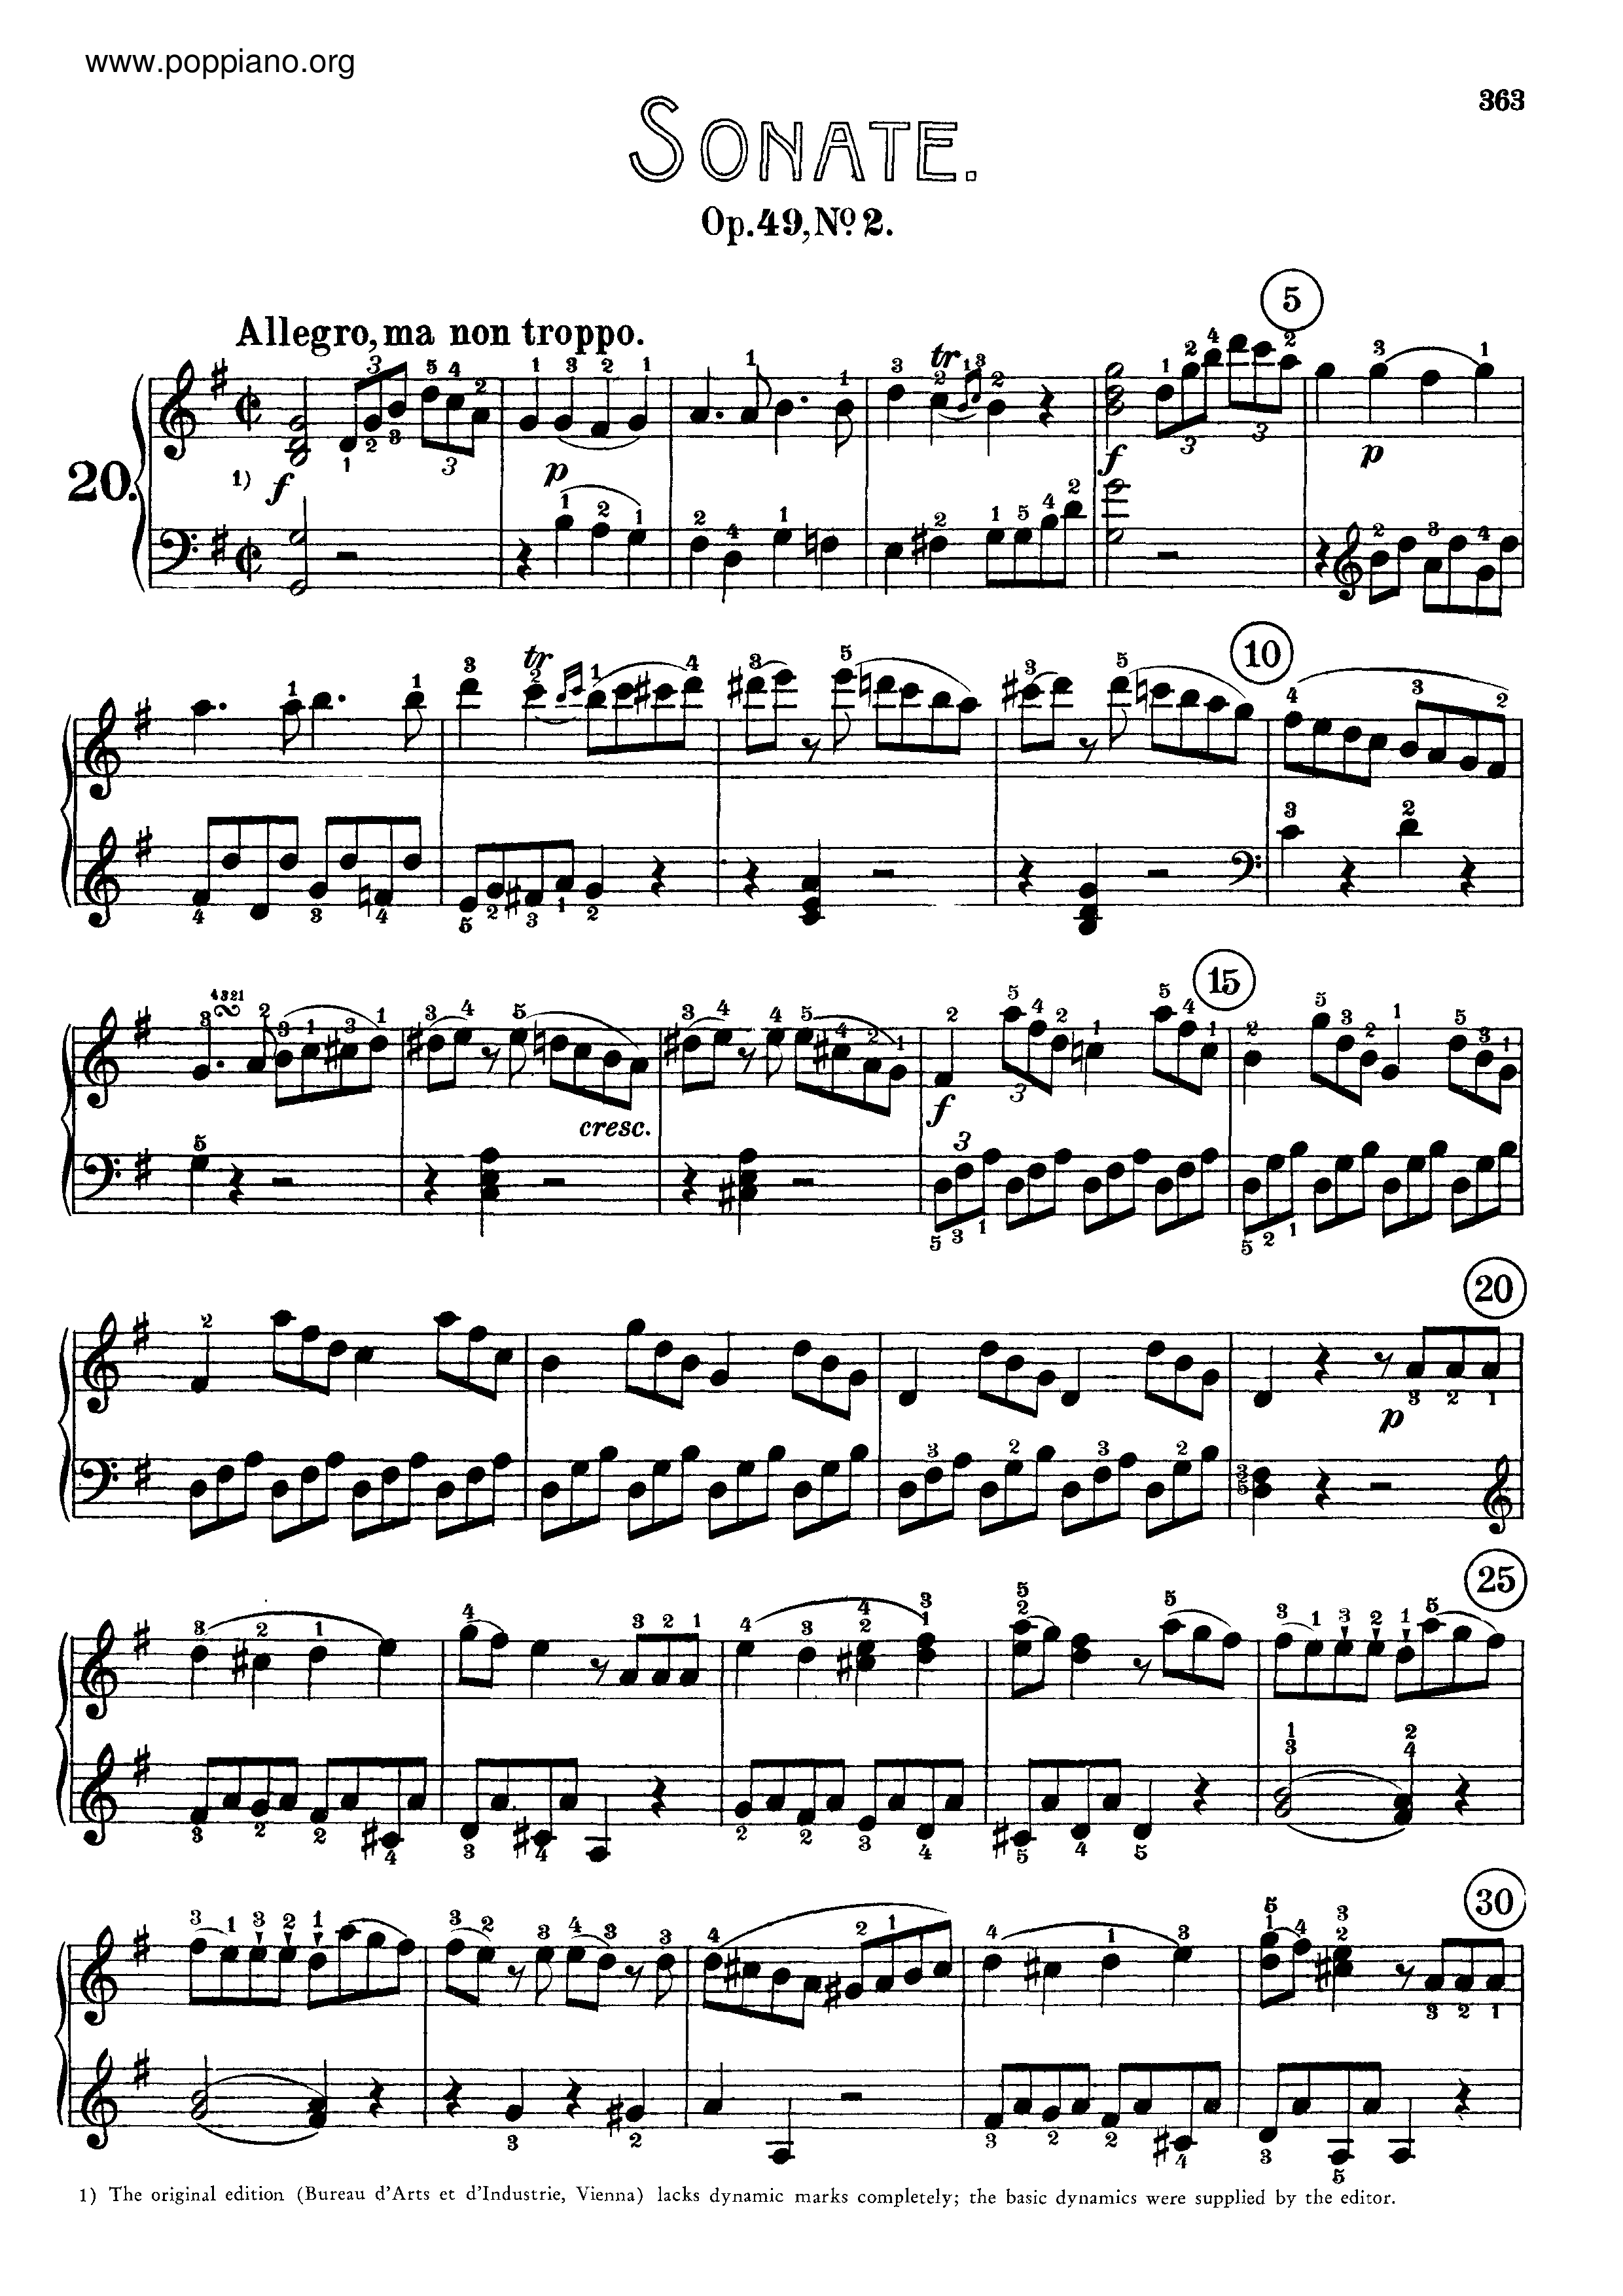 Sonata No. 20 in G major琴谱